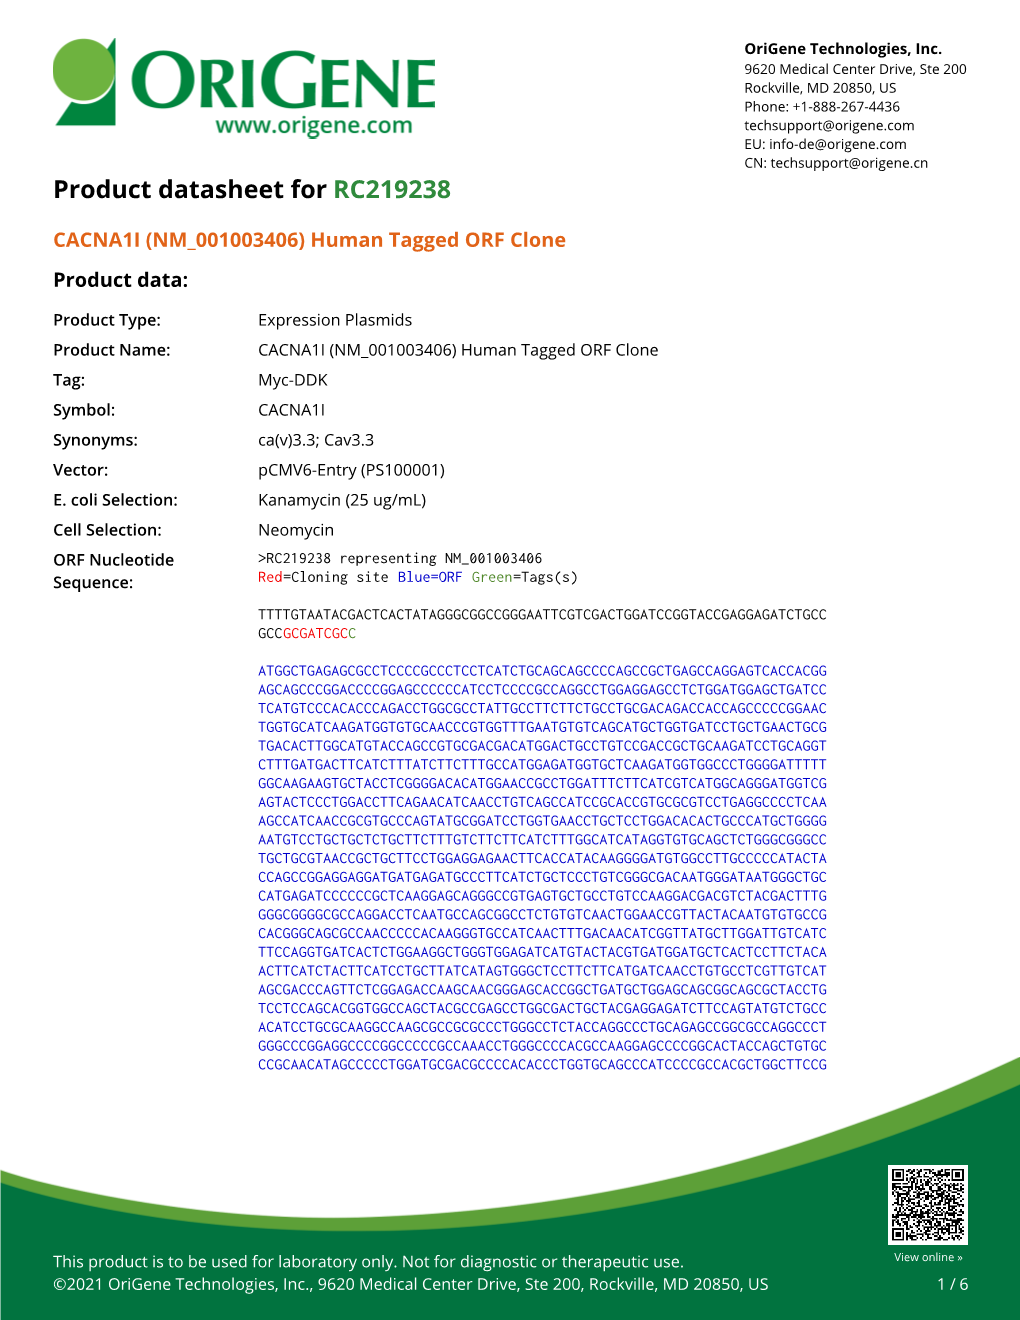 CACNA1I (NM 001003406) Human Tagged ORF Clone Product Data